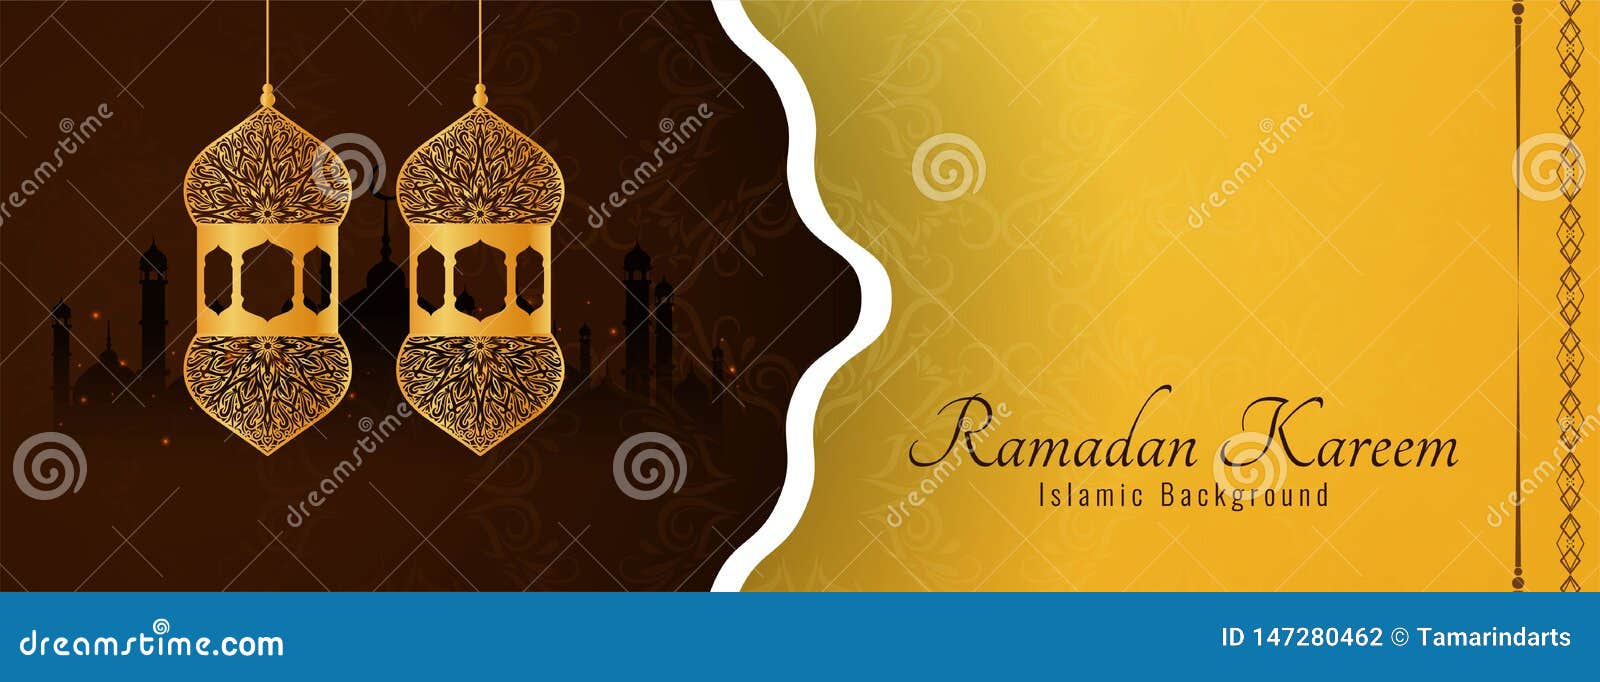 Eid Mubarak Beautiful Islamic Banner Design Stock Vector - Illustration of  celebration, fasting: 147280462